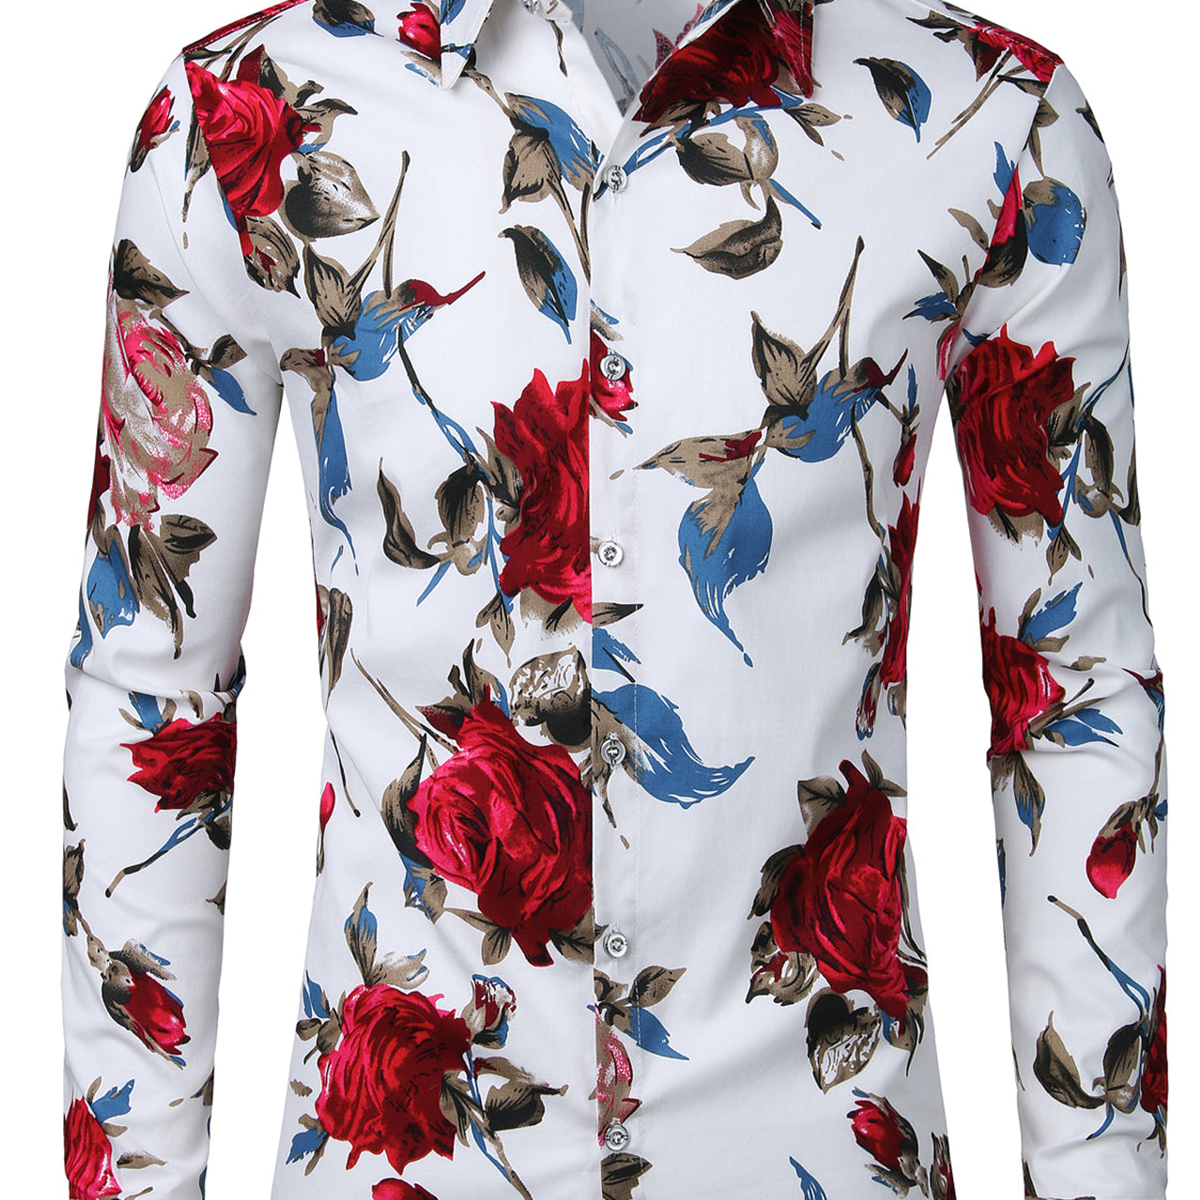 Men's Floral Long Sleeve Animal Print Cotton Casual Button Down Shirt